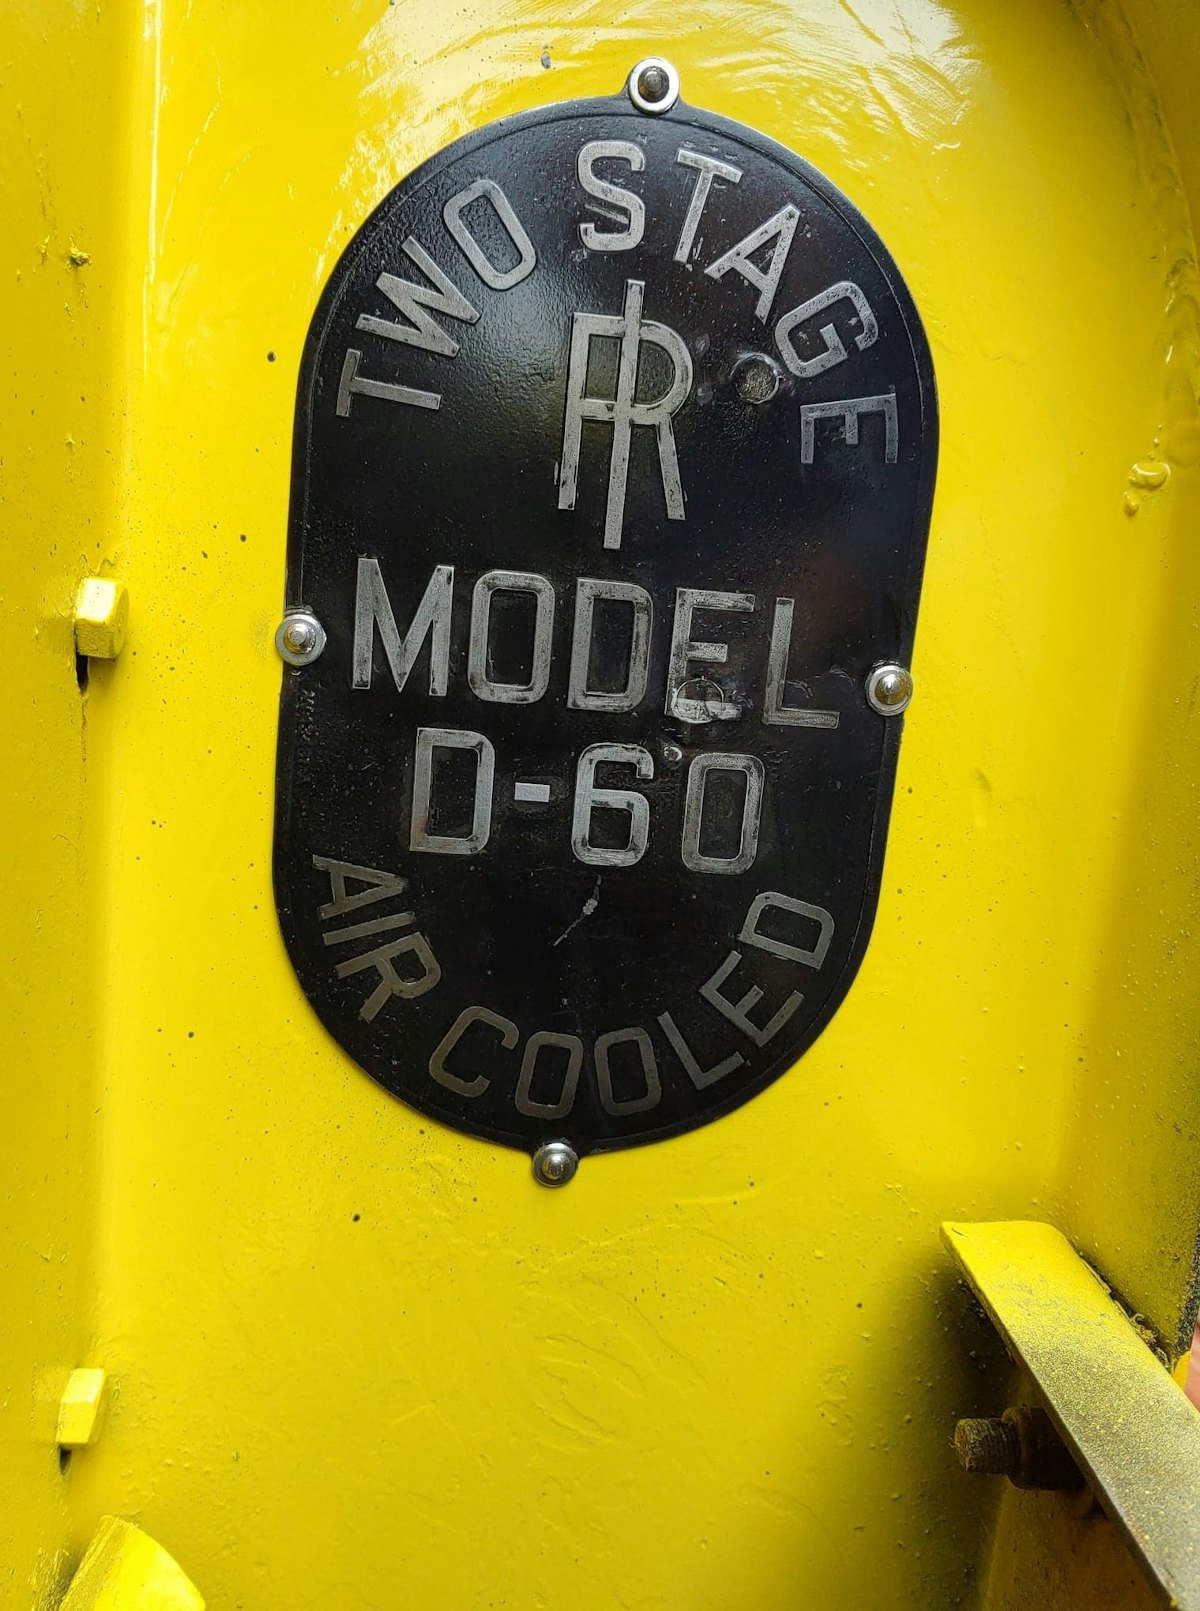 1943 Ingersoll-Rand air compressor restored by grandson (Video